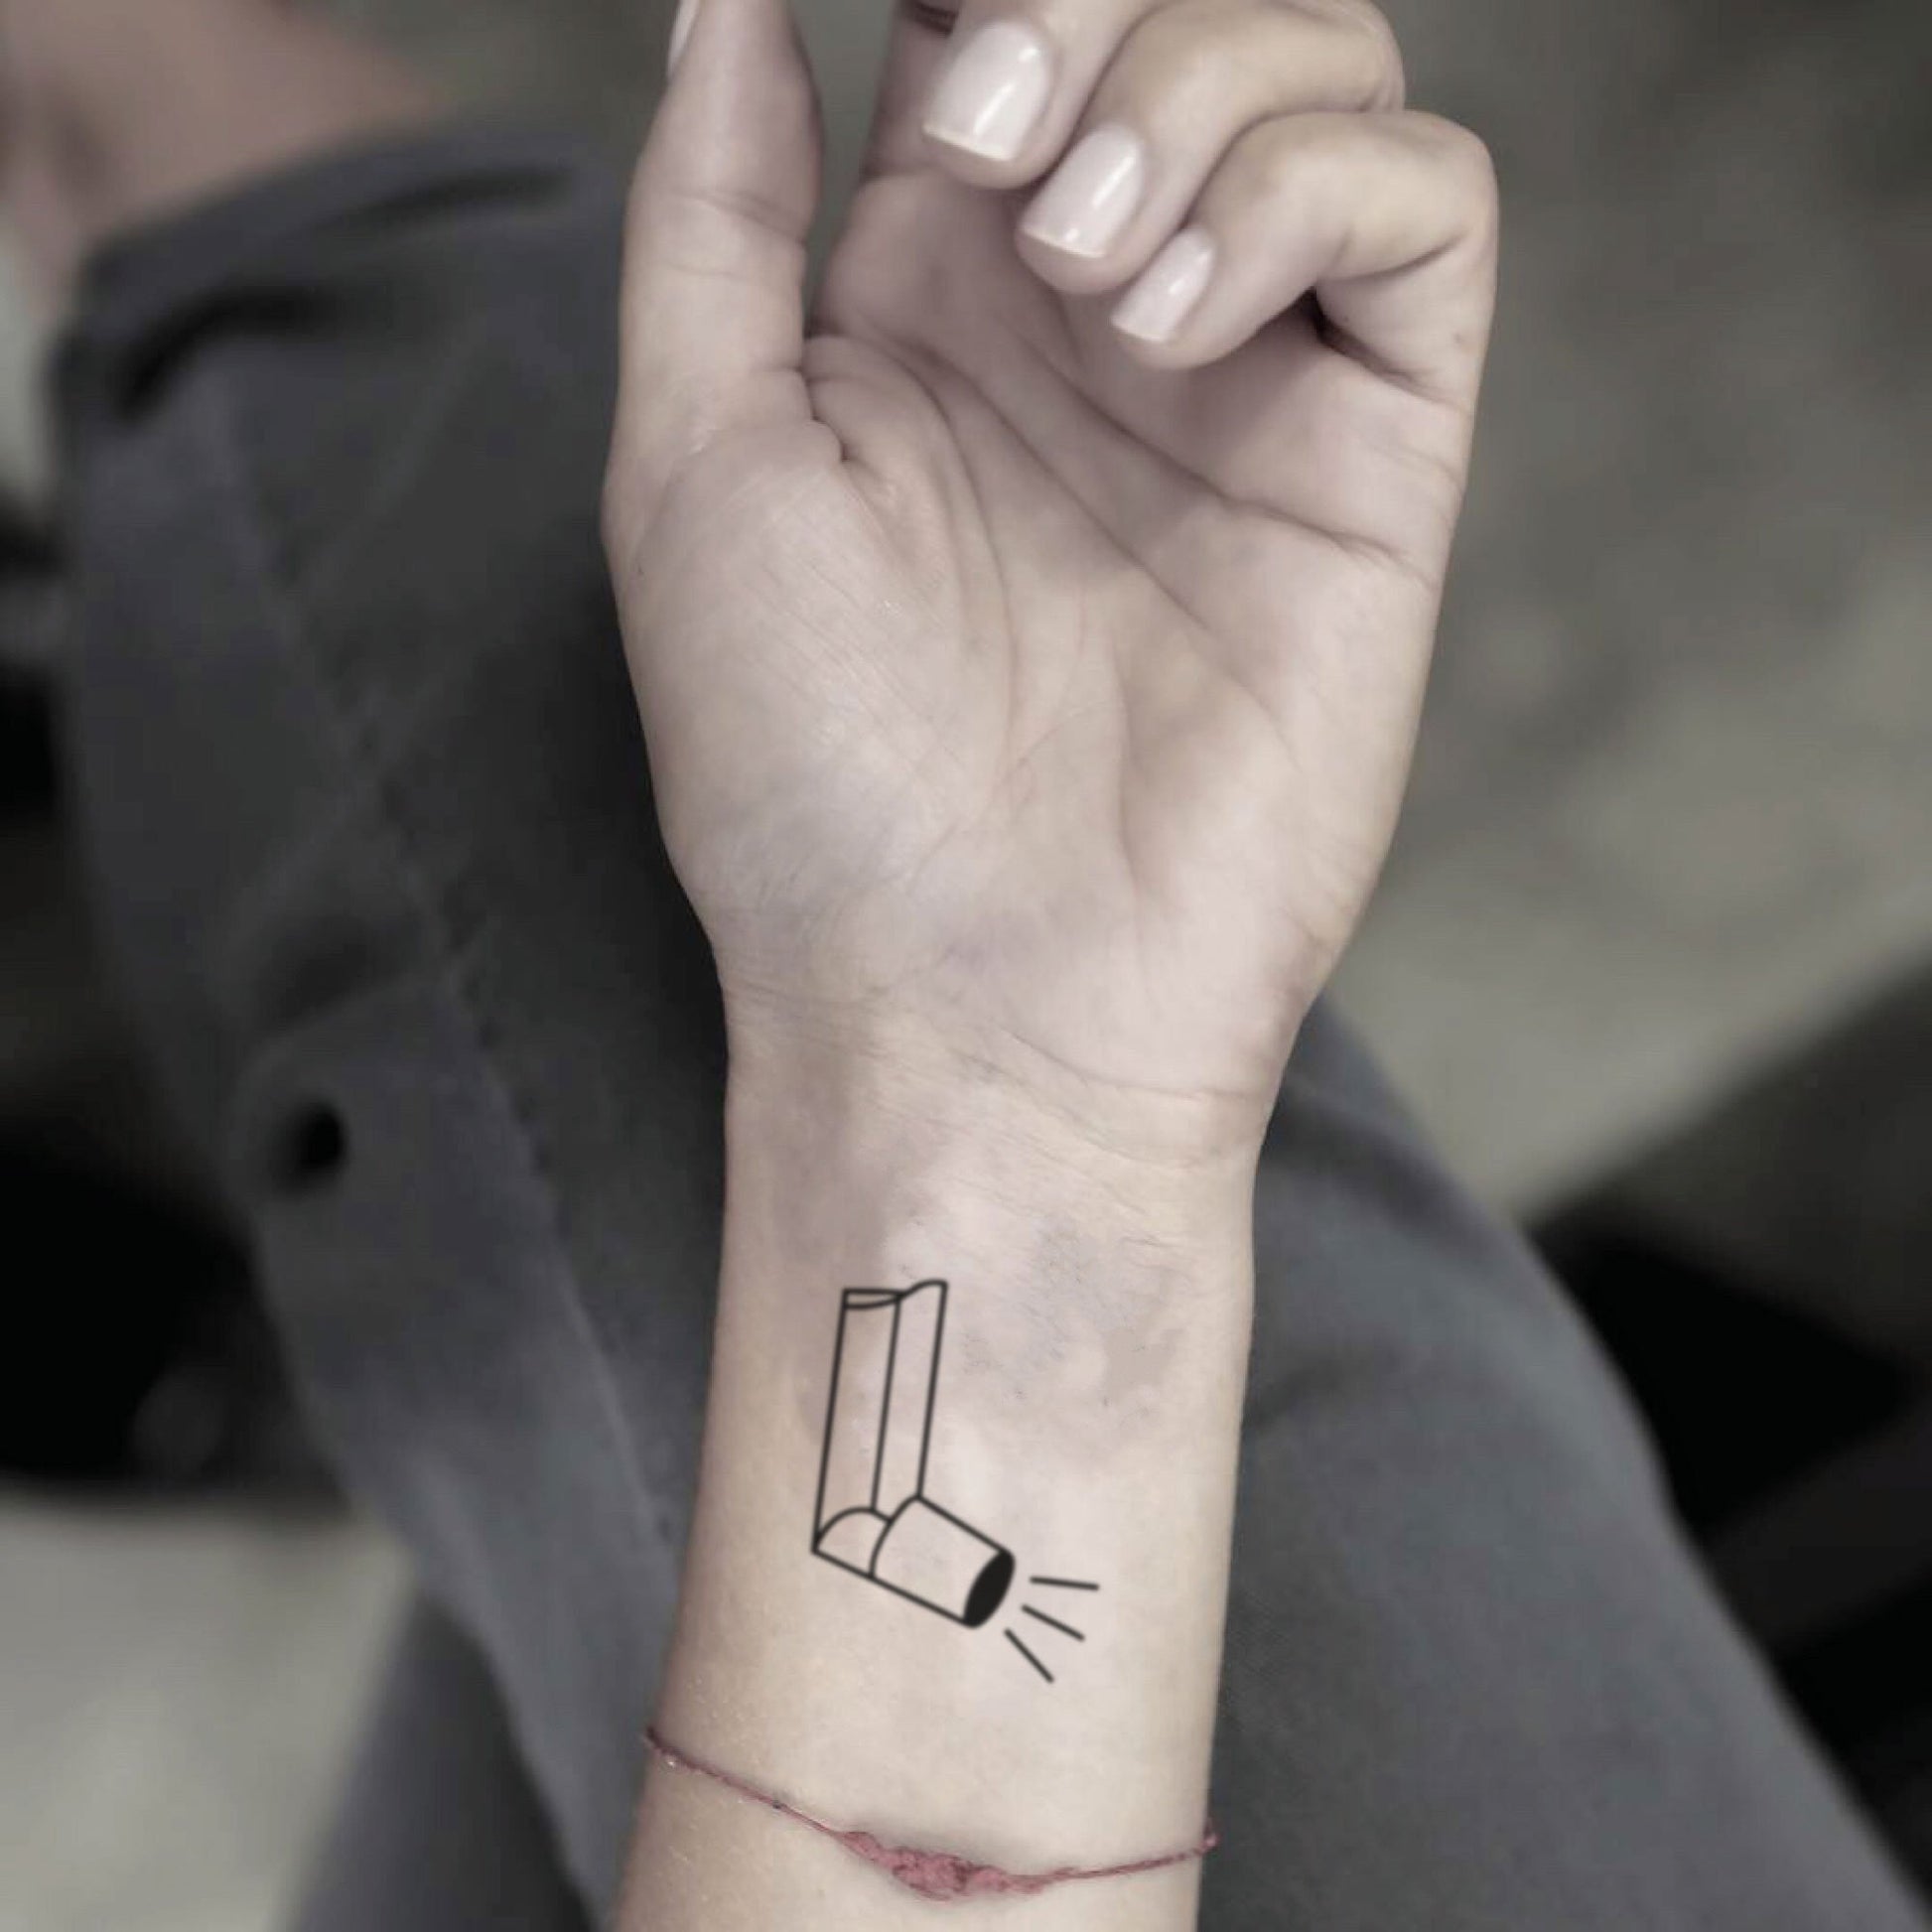 fake small asthma inhaler minimalist temporary tattoo sticker design idea on wrist